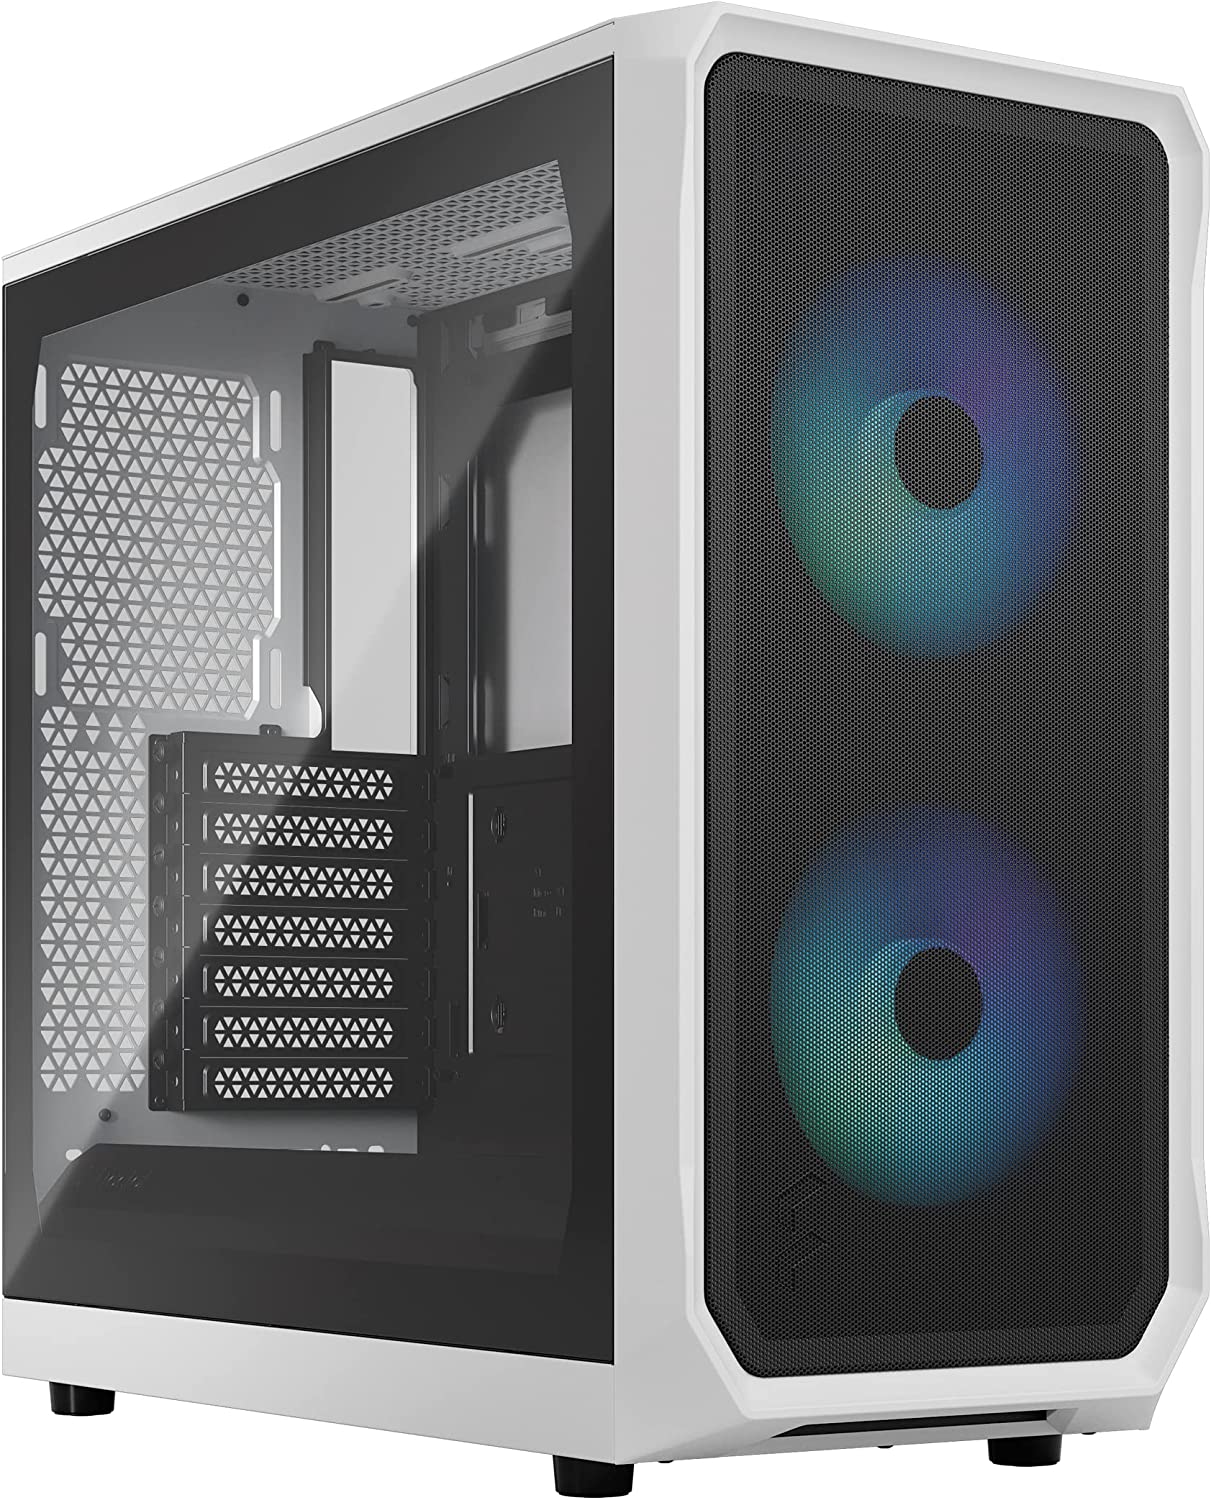 Fractal Design Focus 2 RGB ATX Case, White, Side Window, No Power Supply, USB3.1 - CAS-FOCUS2RGB